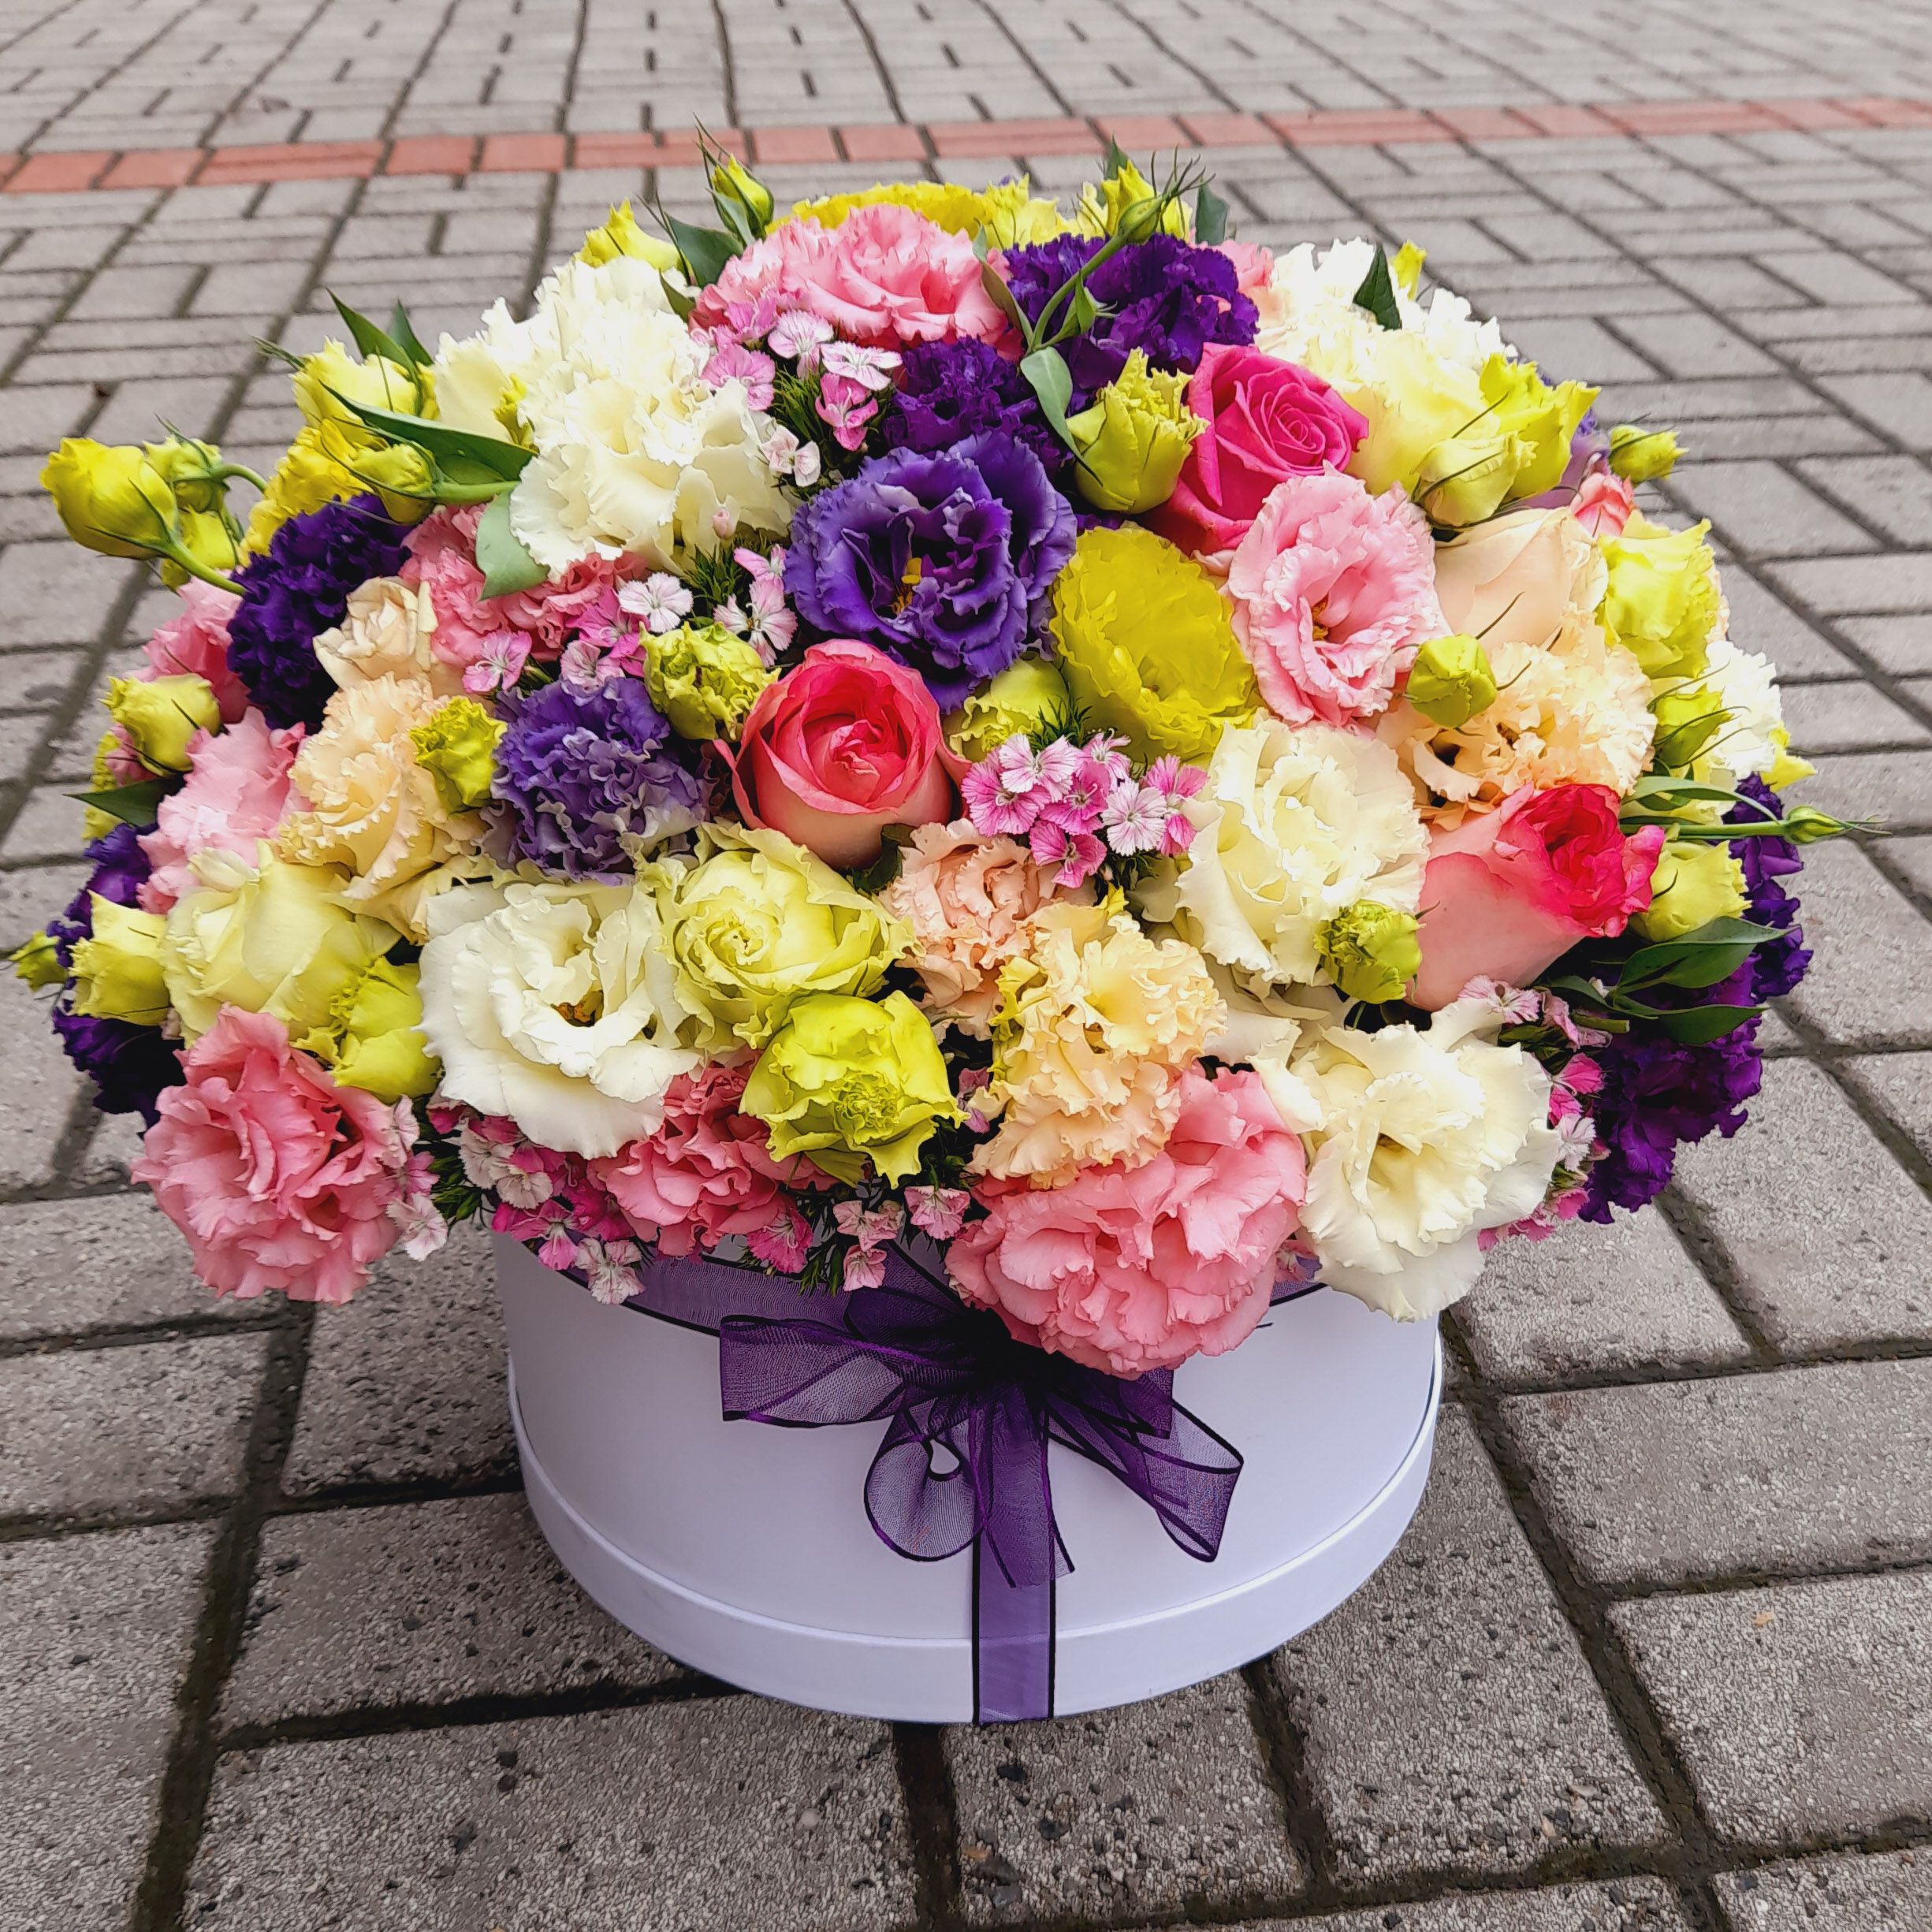  Alanya Blumenlieferung VIP Lisyantus im Karton